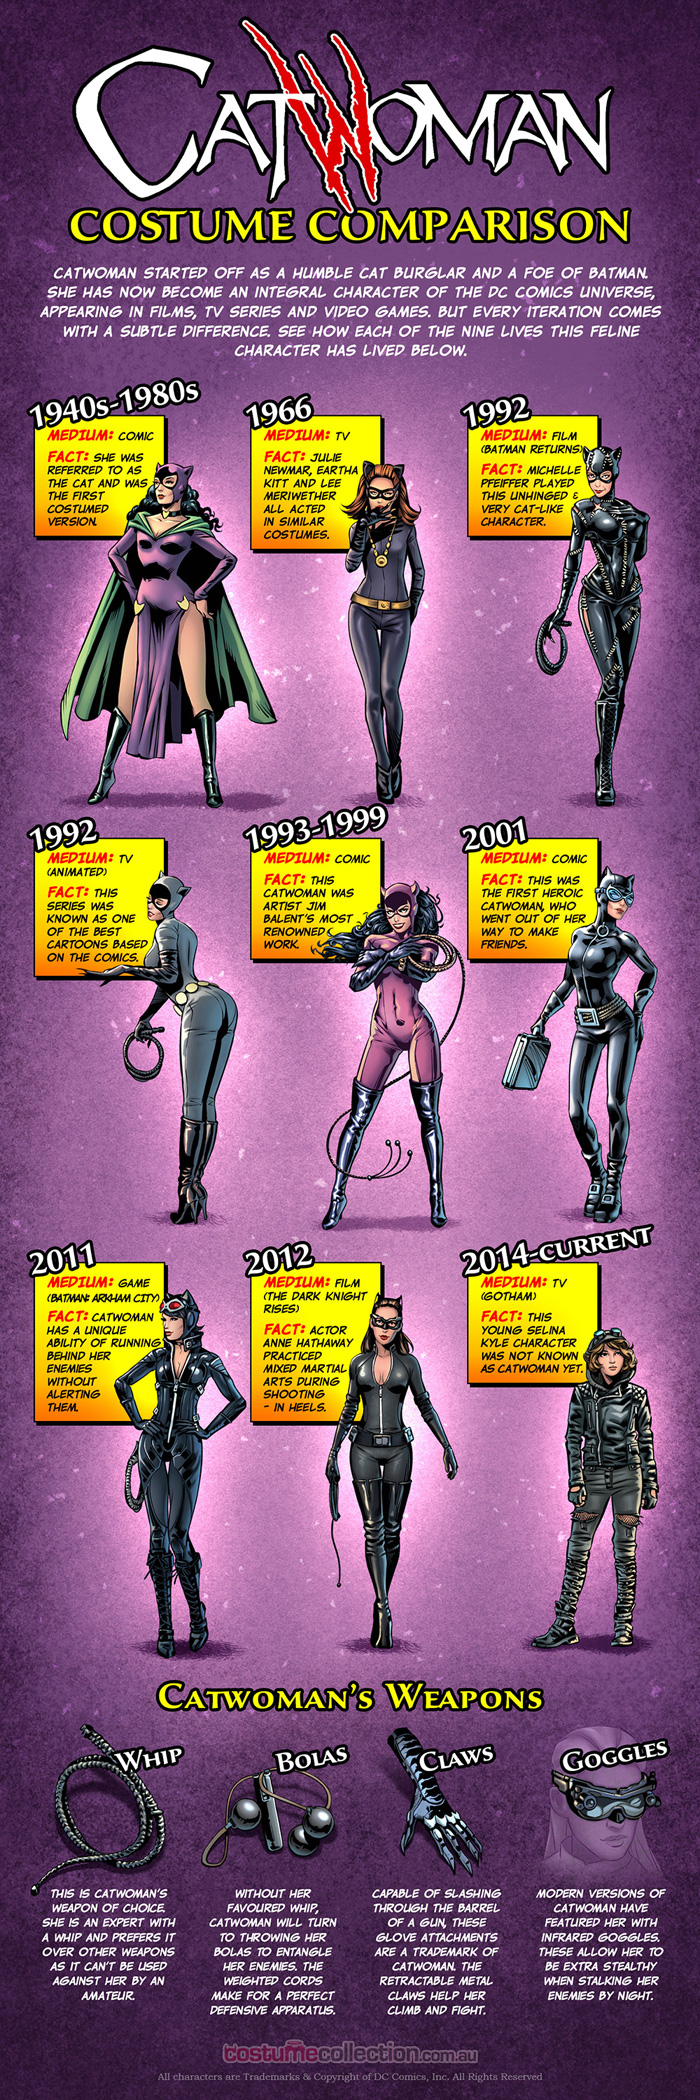 Costume Comparison: Nine Lives of Catwoman